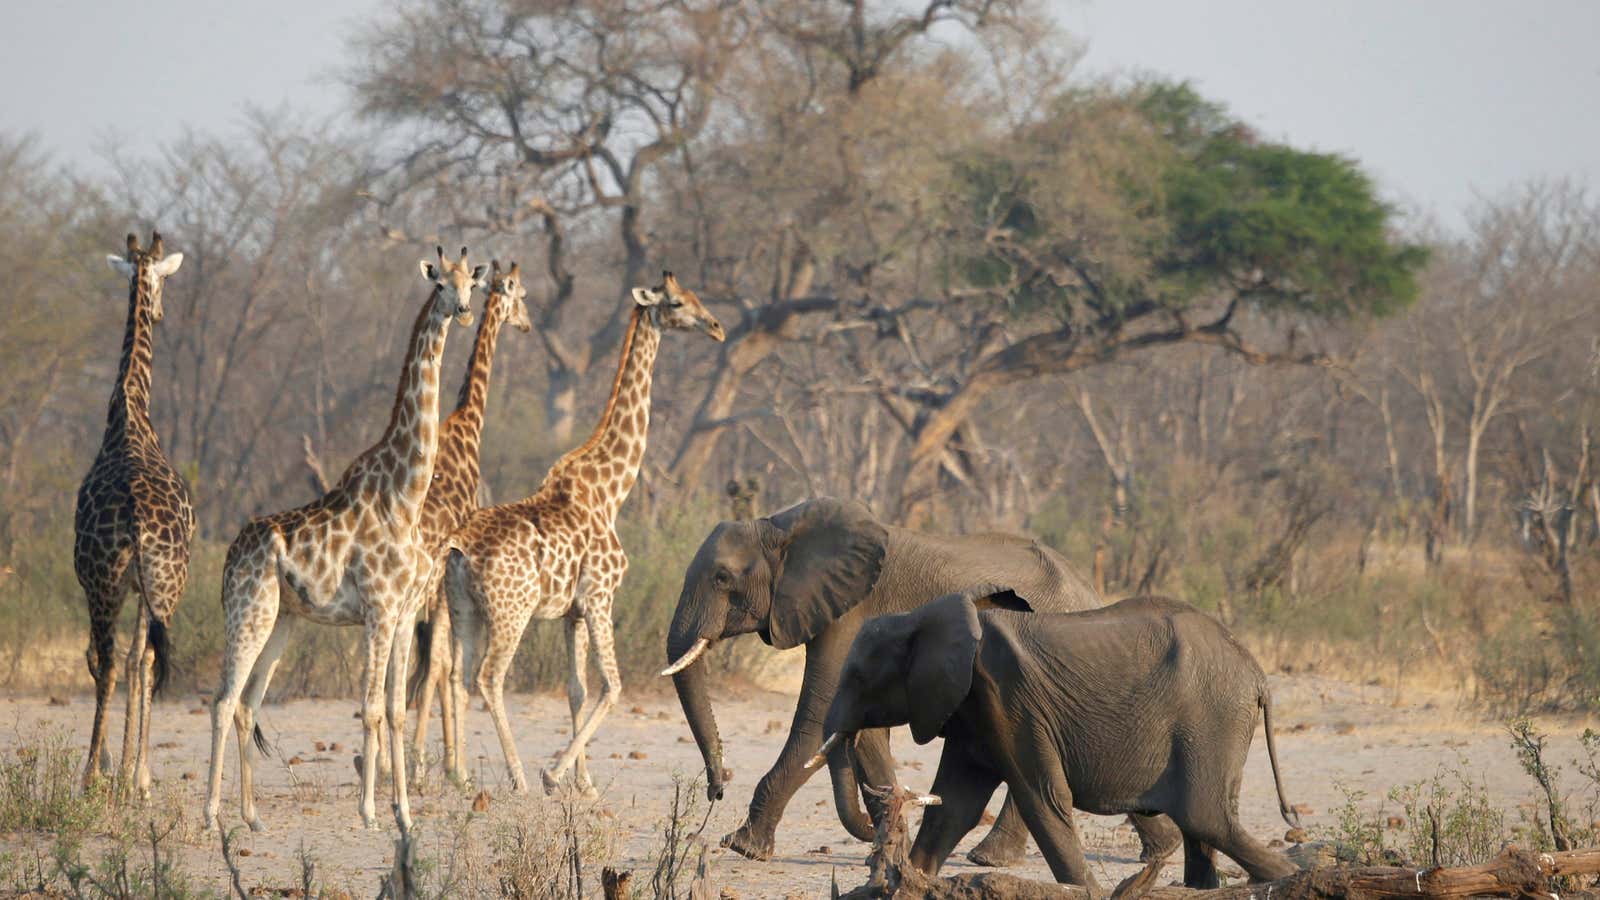 A group of elephants and giraffes walk near a watering hole inside Hwange National Park, in Zimbabwe